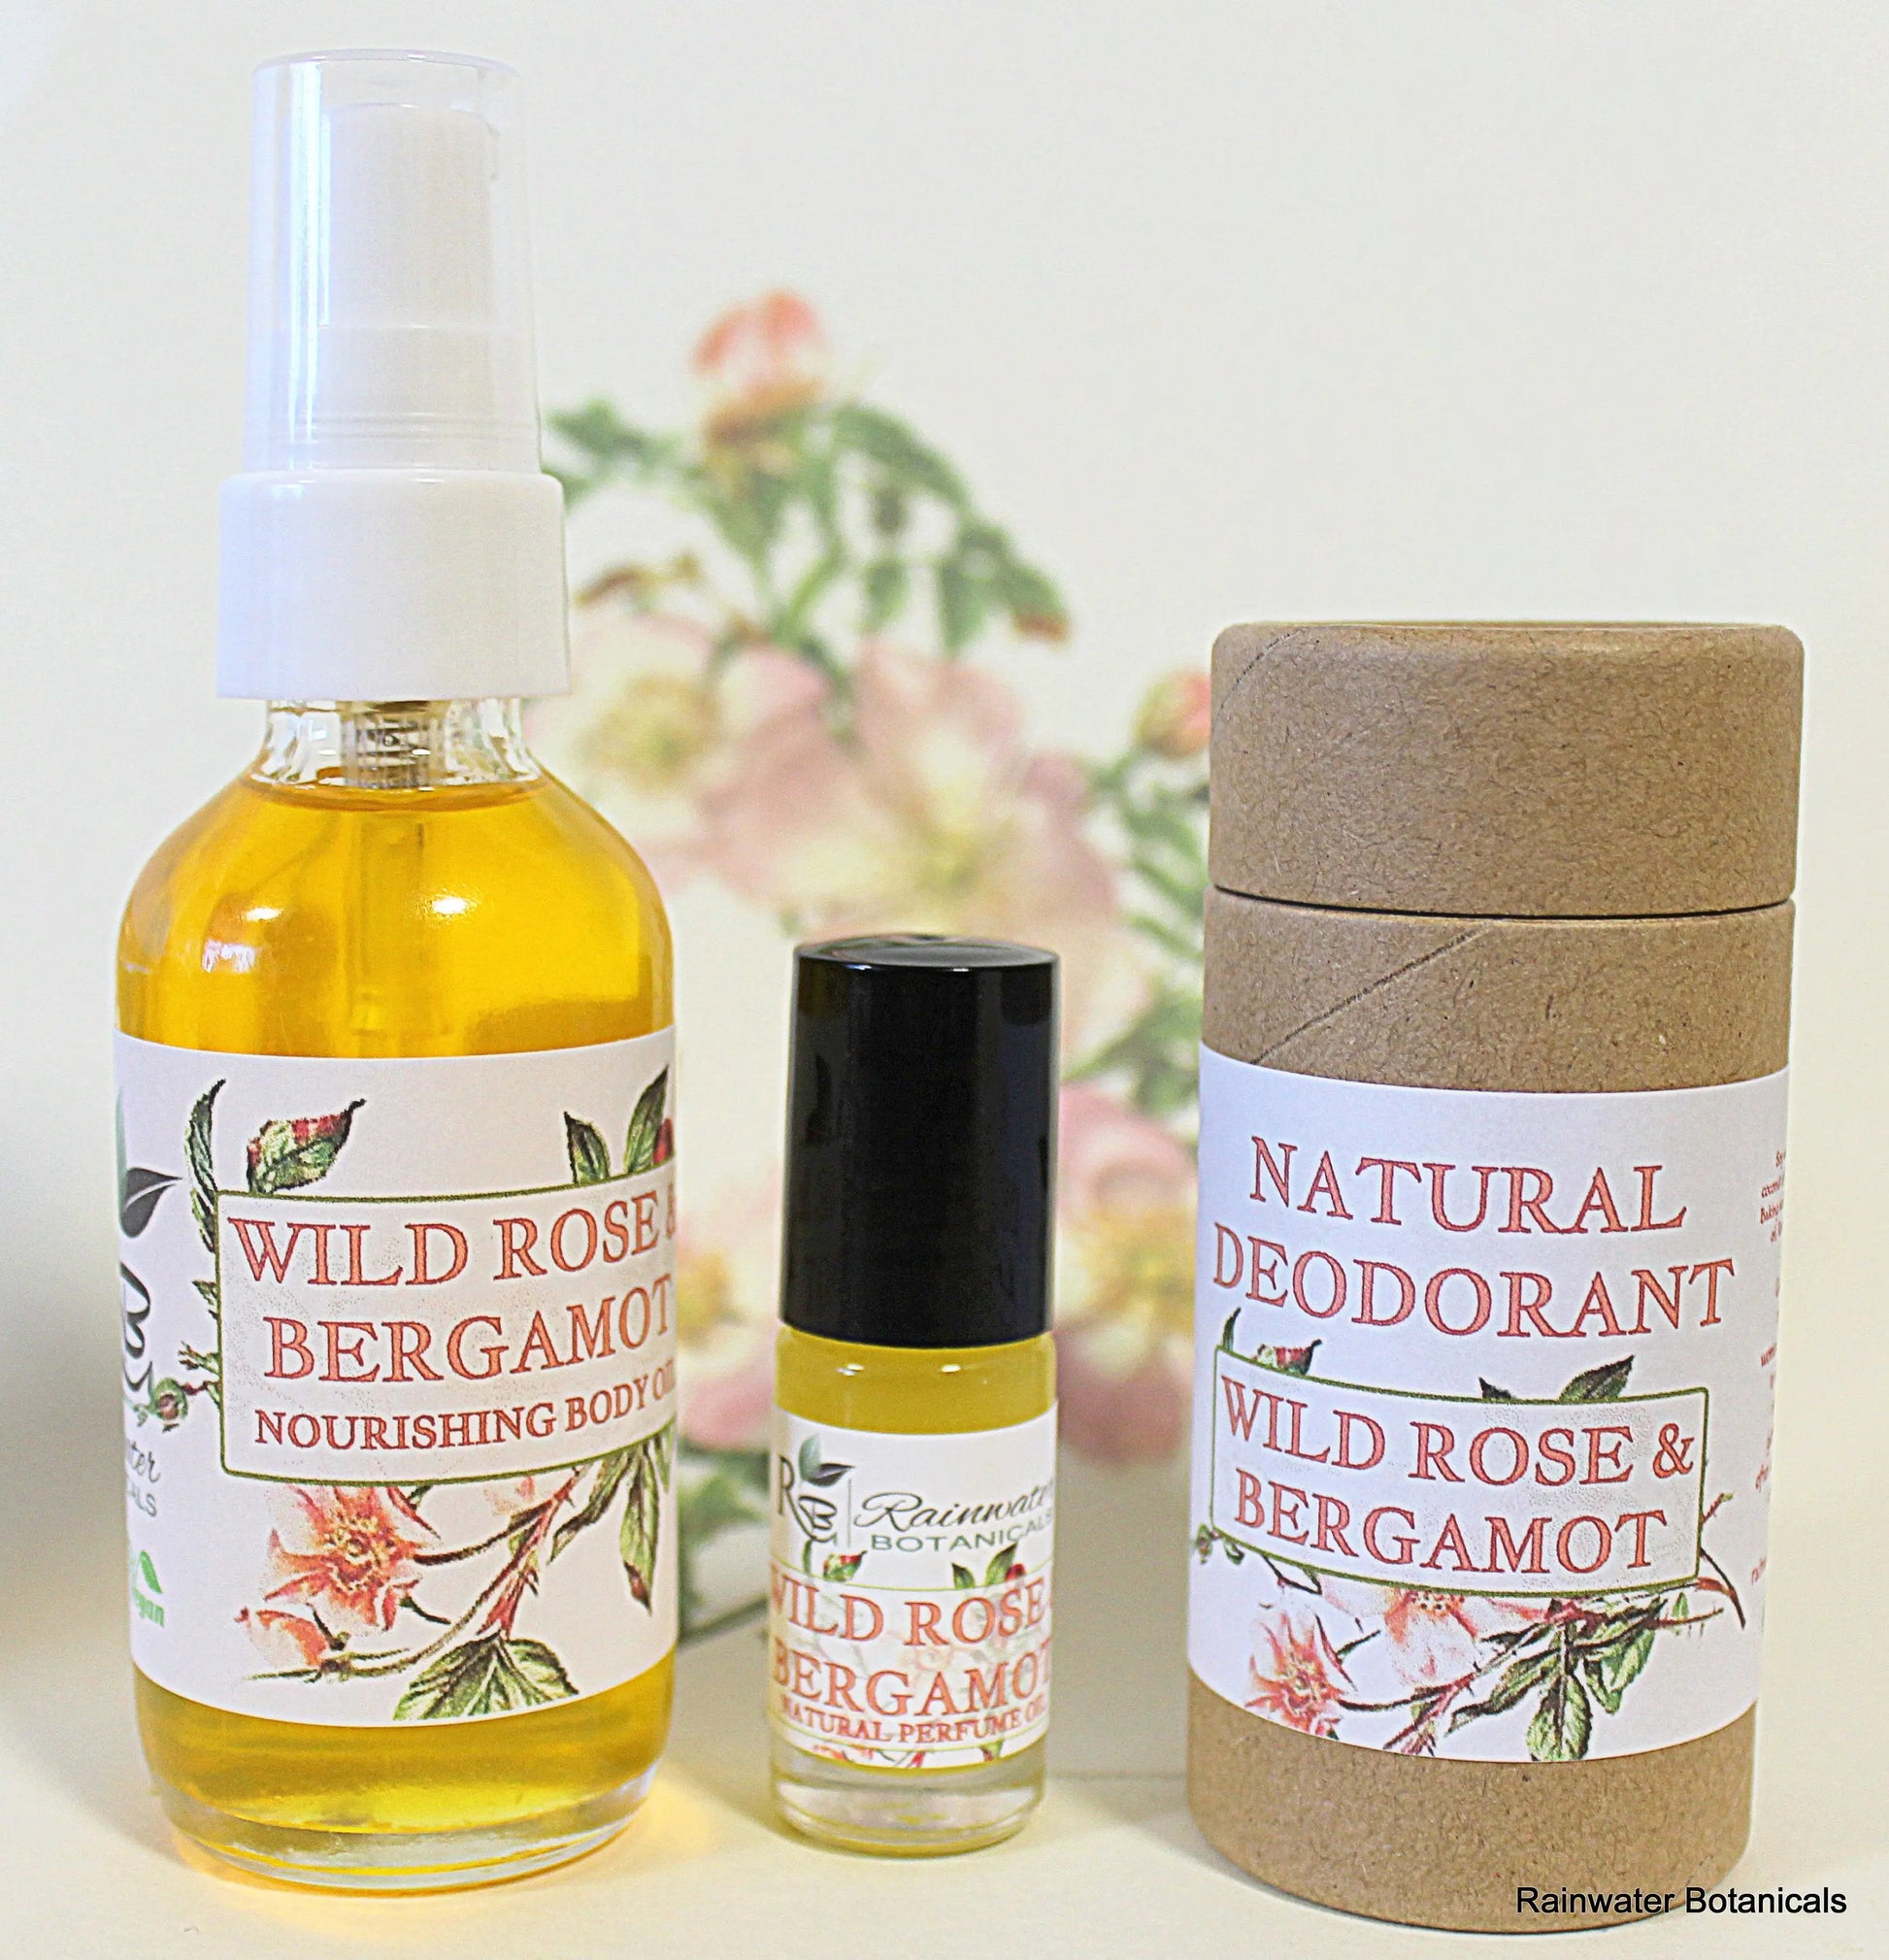 Wild Rose & Bergamot Body and Bath Oil